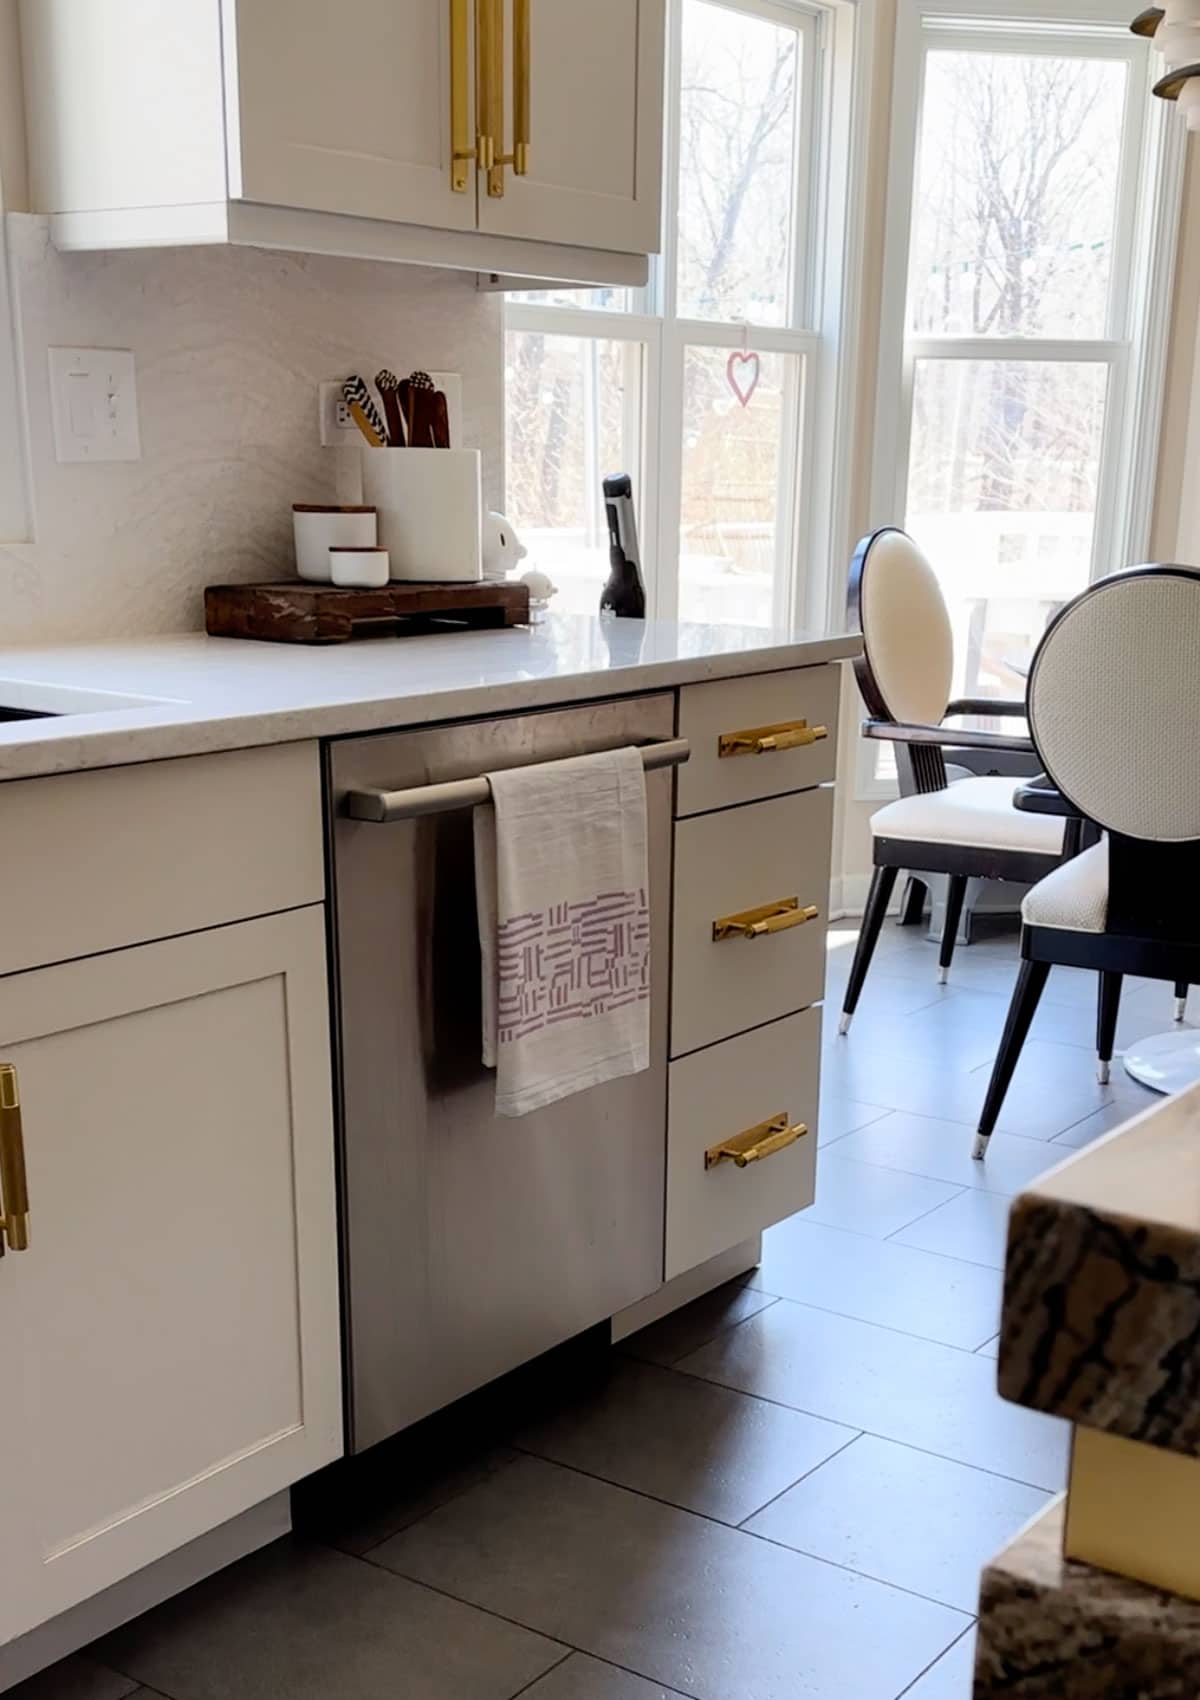 DIY Kitchen Hand Towel with Cricut EasyPress - The Idea Room